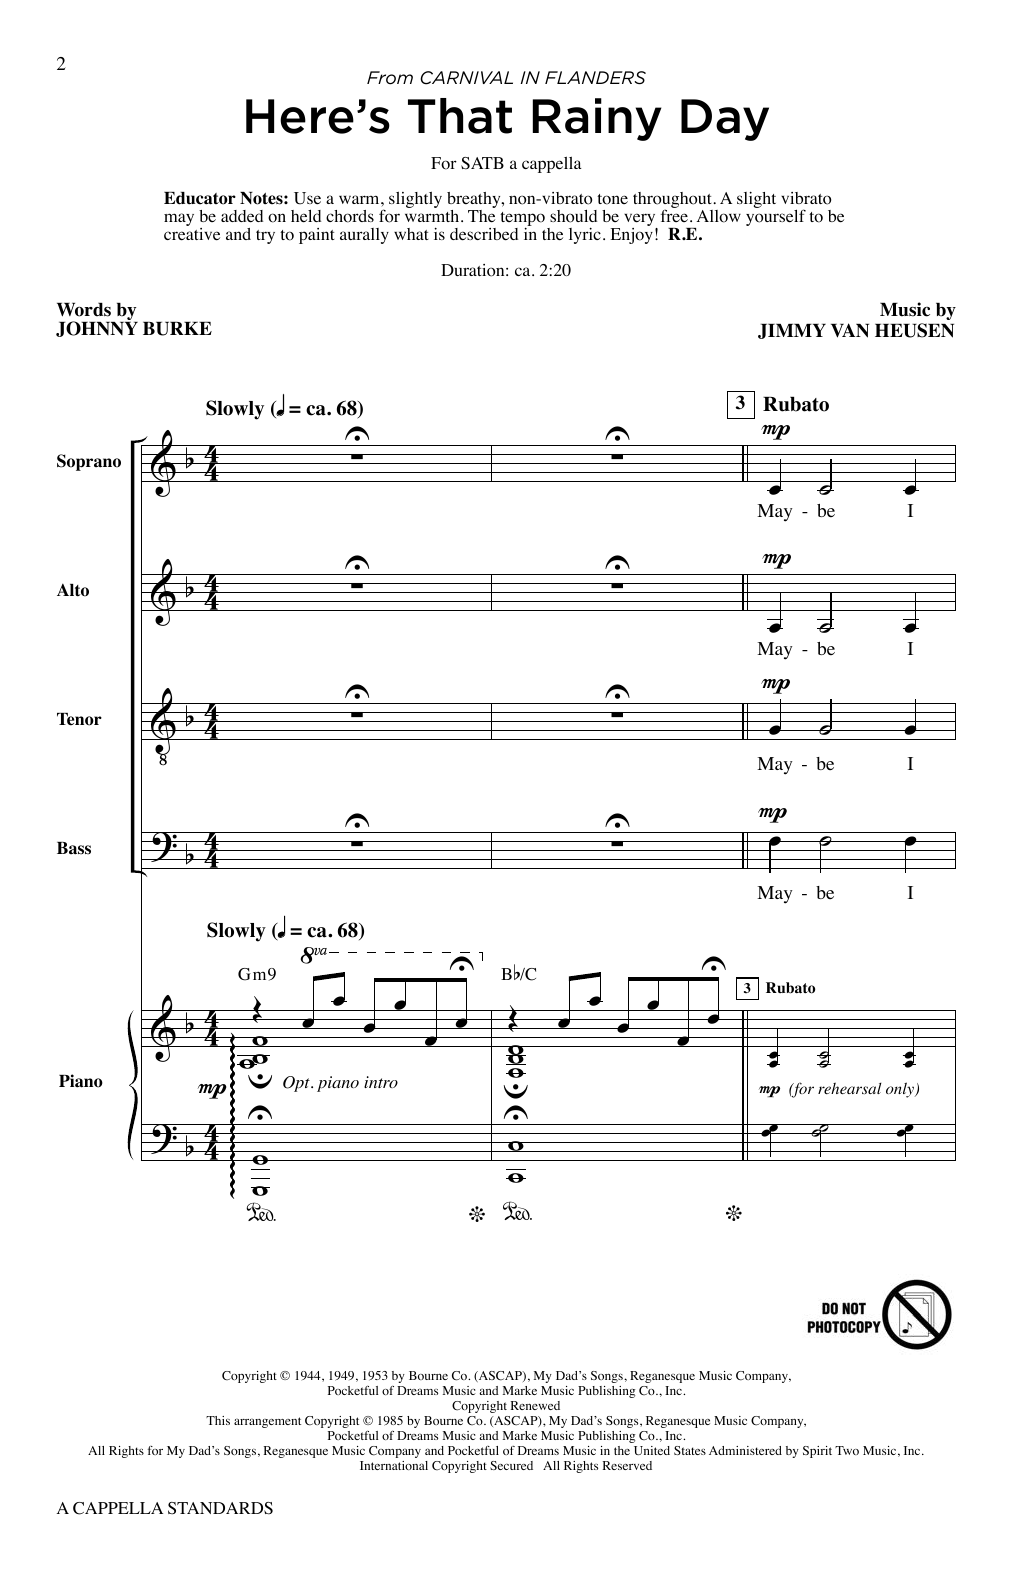 Download Roger Emerson A Cappella Standards Sheet Music